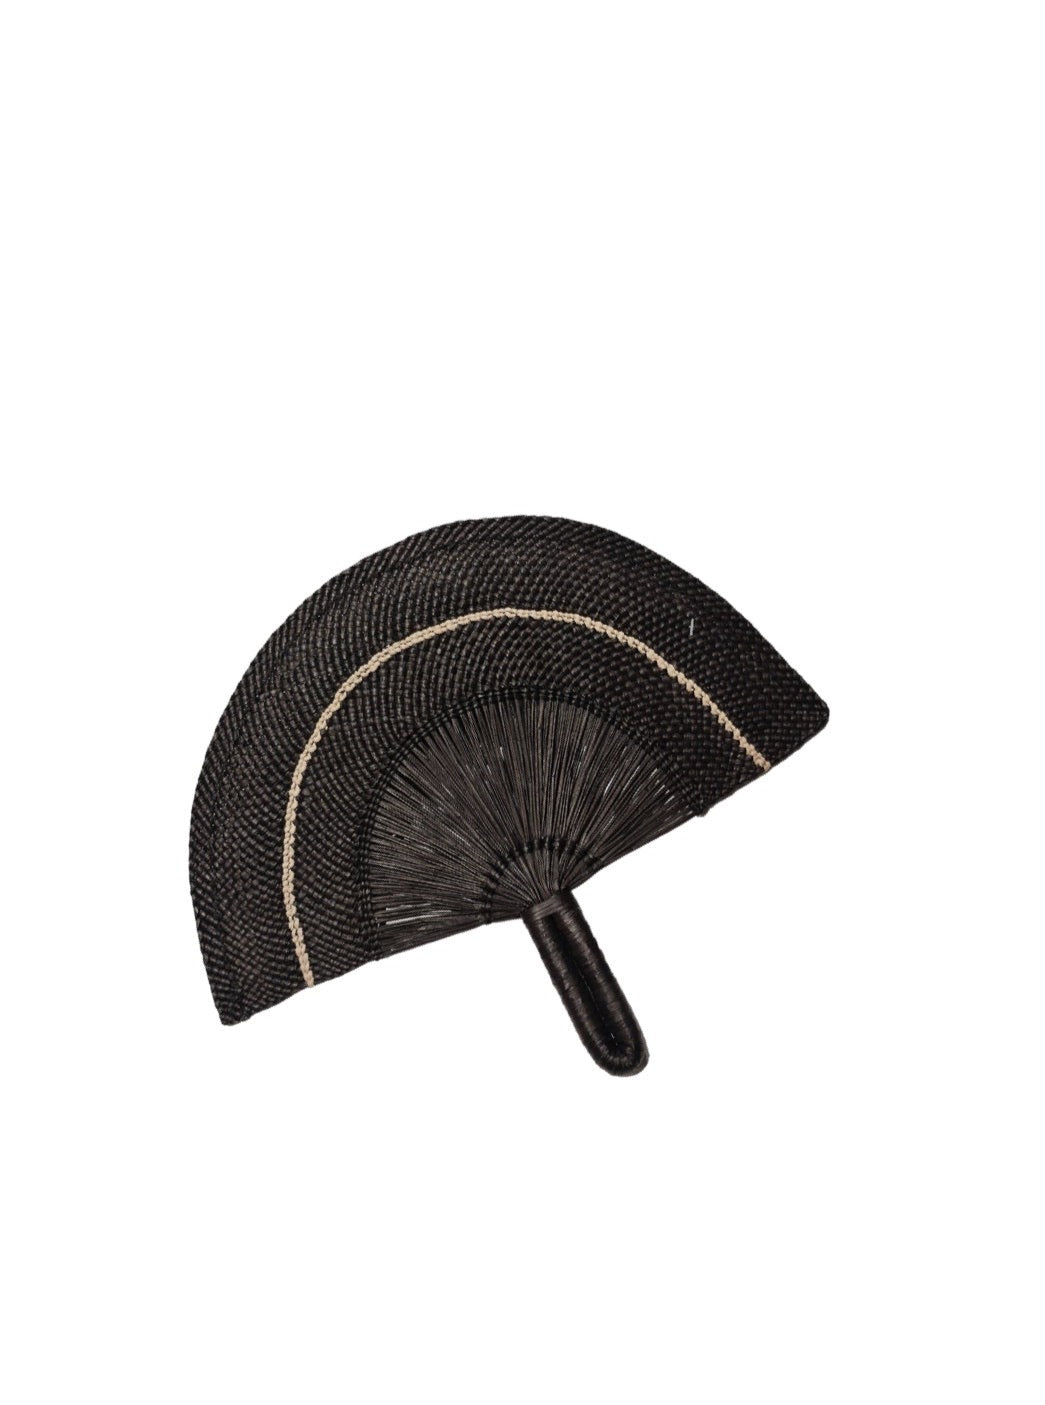 Handwoven fan, black with white stripe